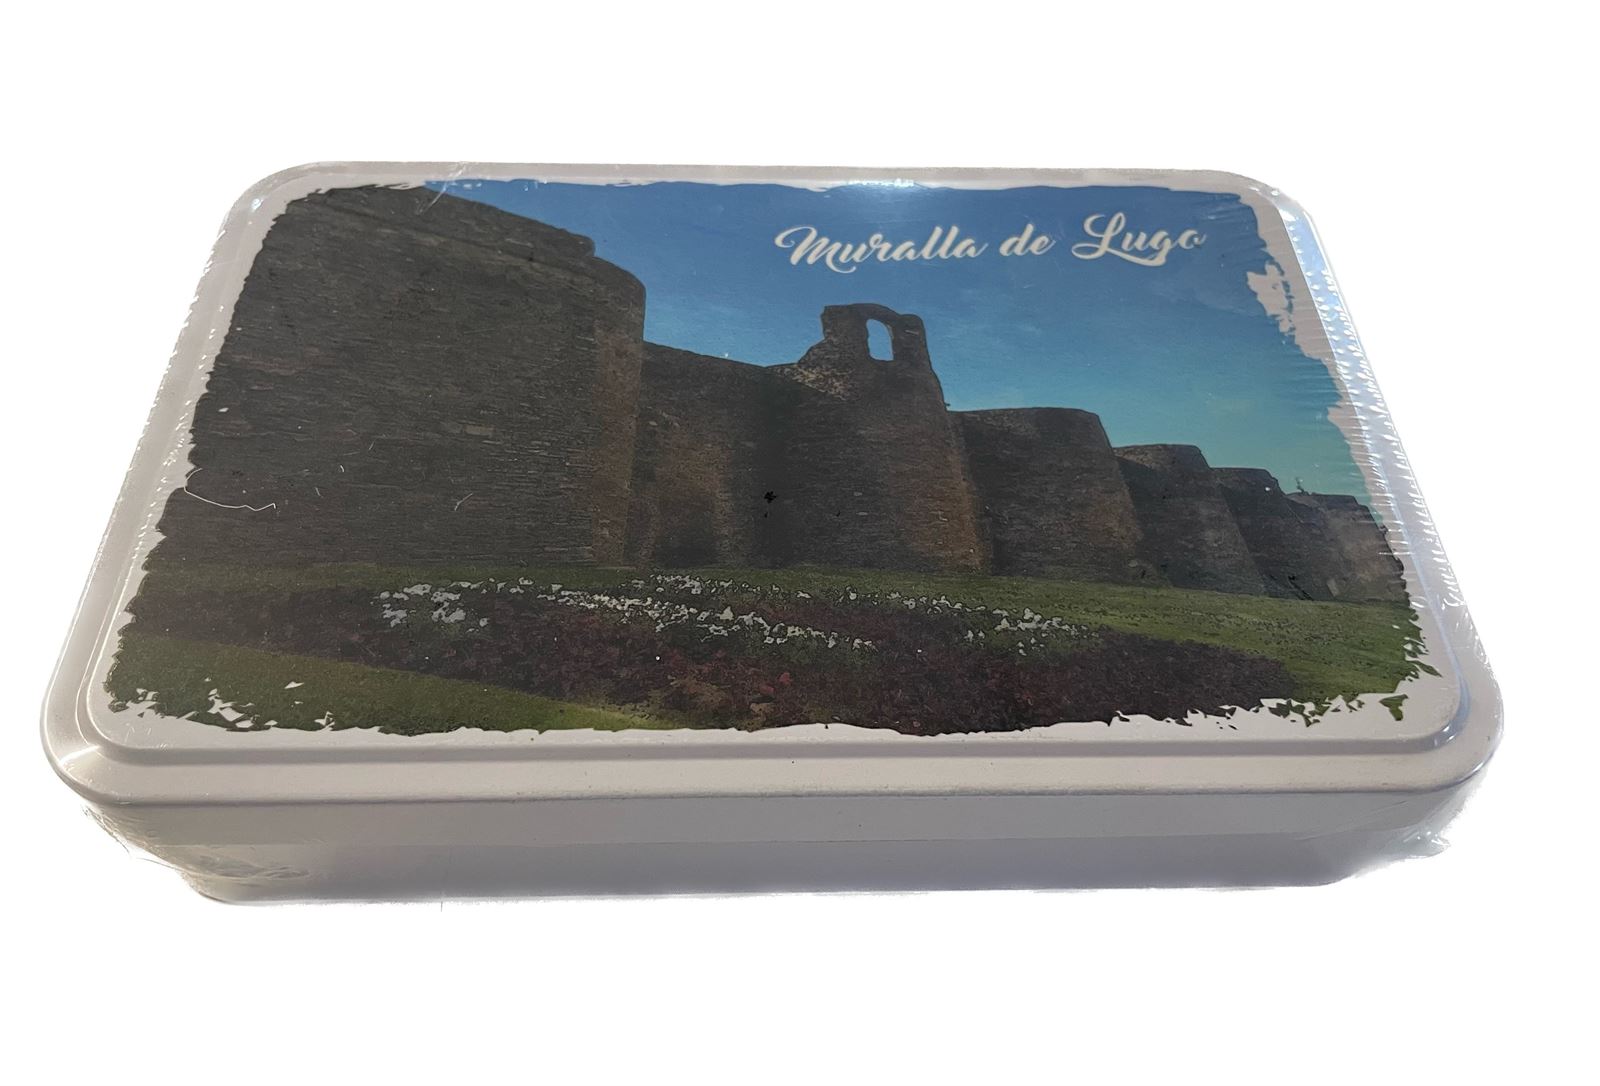 Lata Surtido de Pastas Muralla de Lugo 150grs - Imagen 2